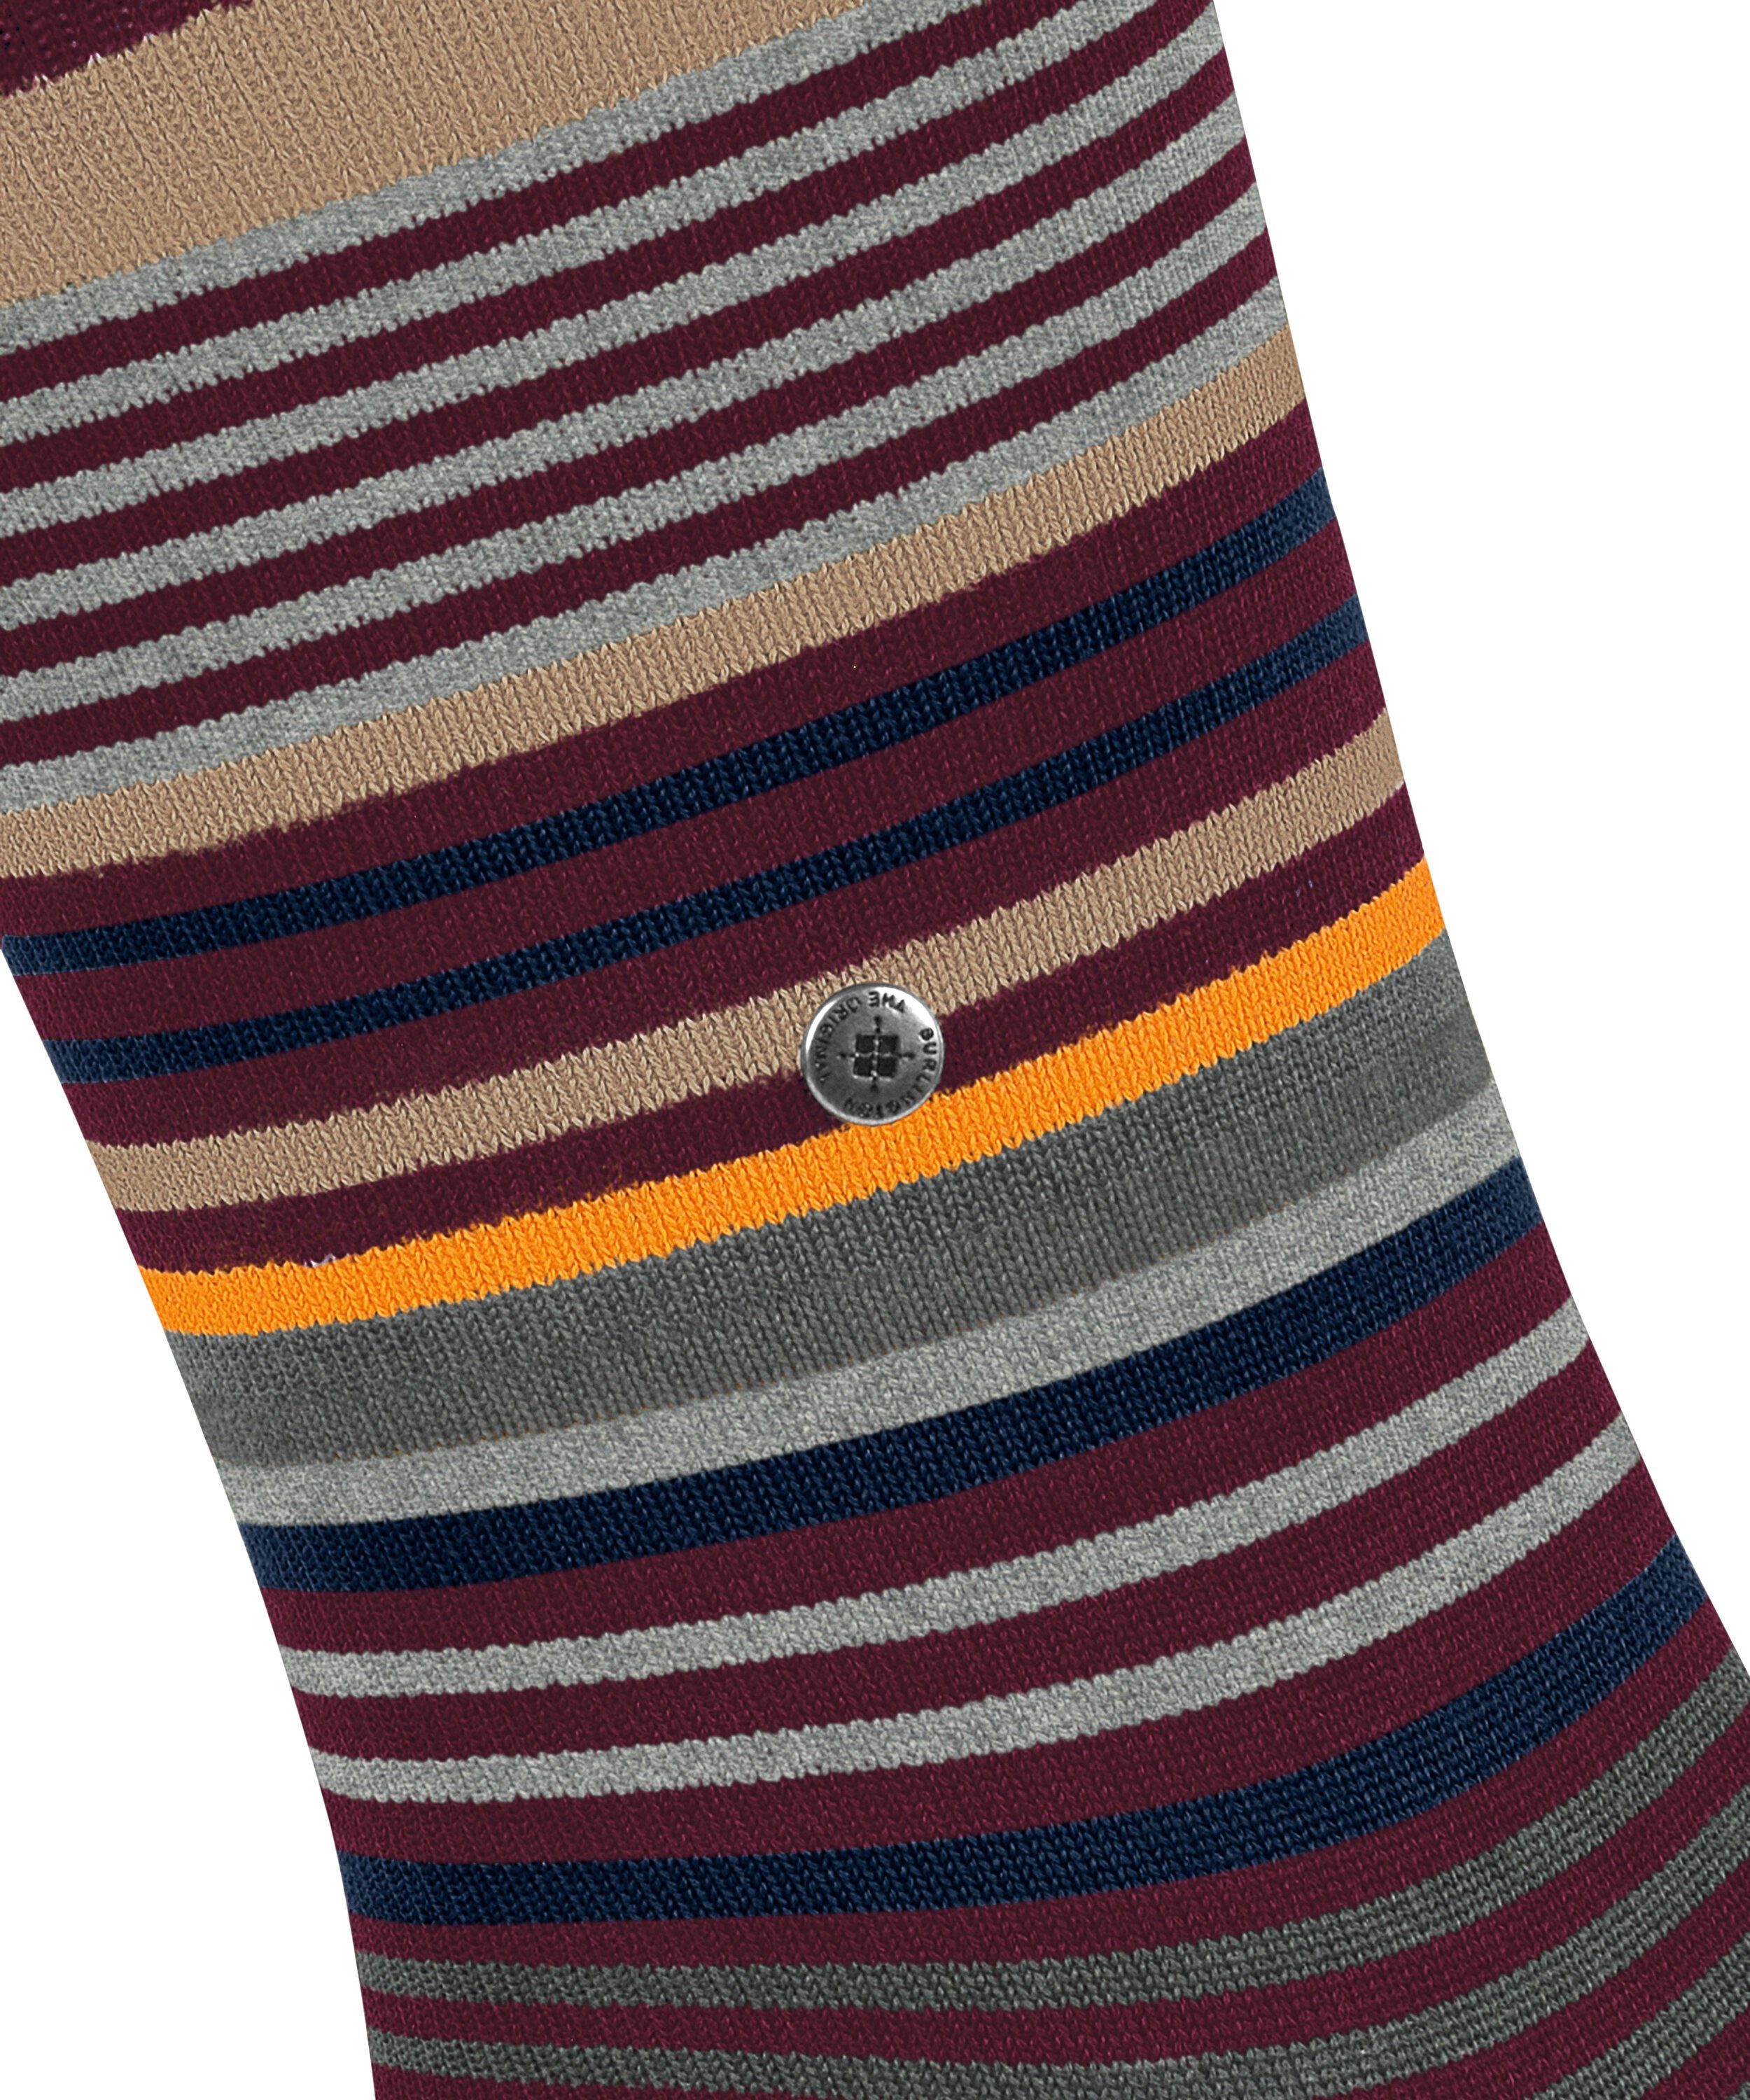 Burlington Socken (8435) claret Stripe (1-Paar)